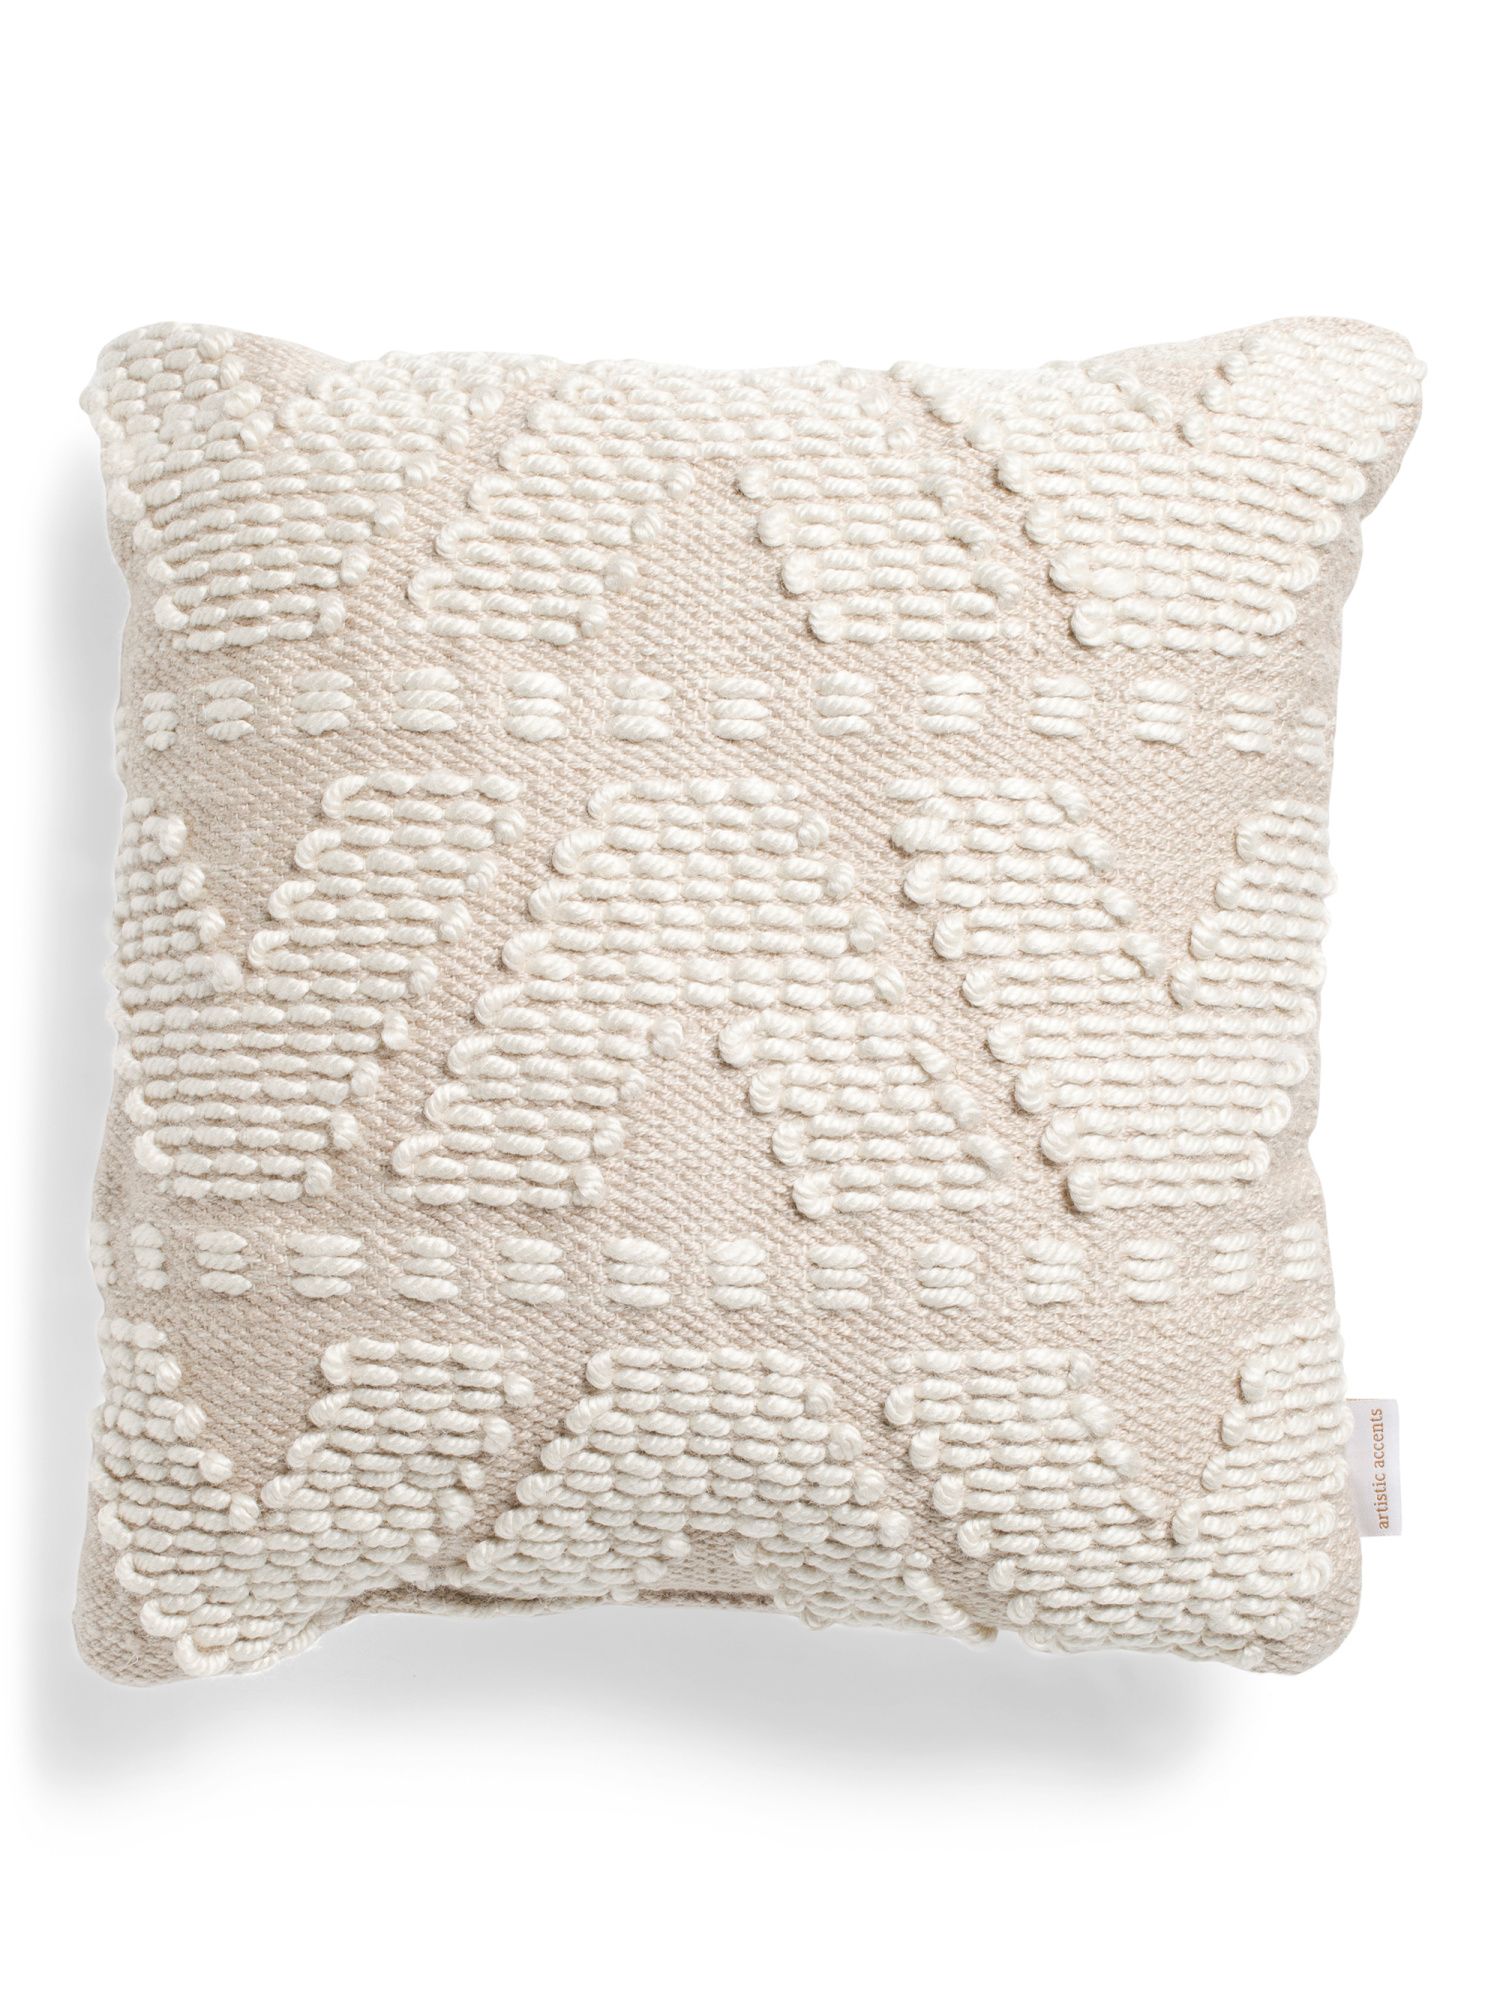 18x18 Indoor Outdoor Triangle Pillow | TJ Maxx